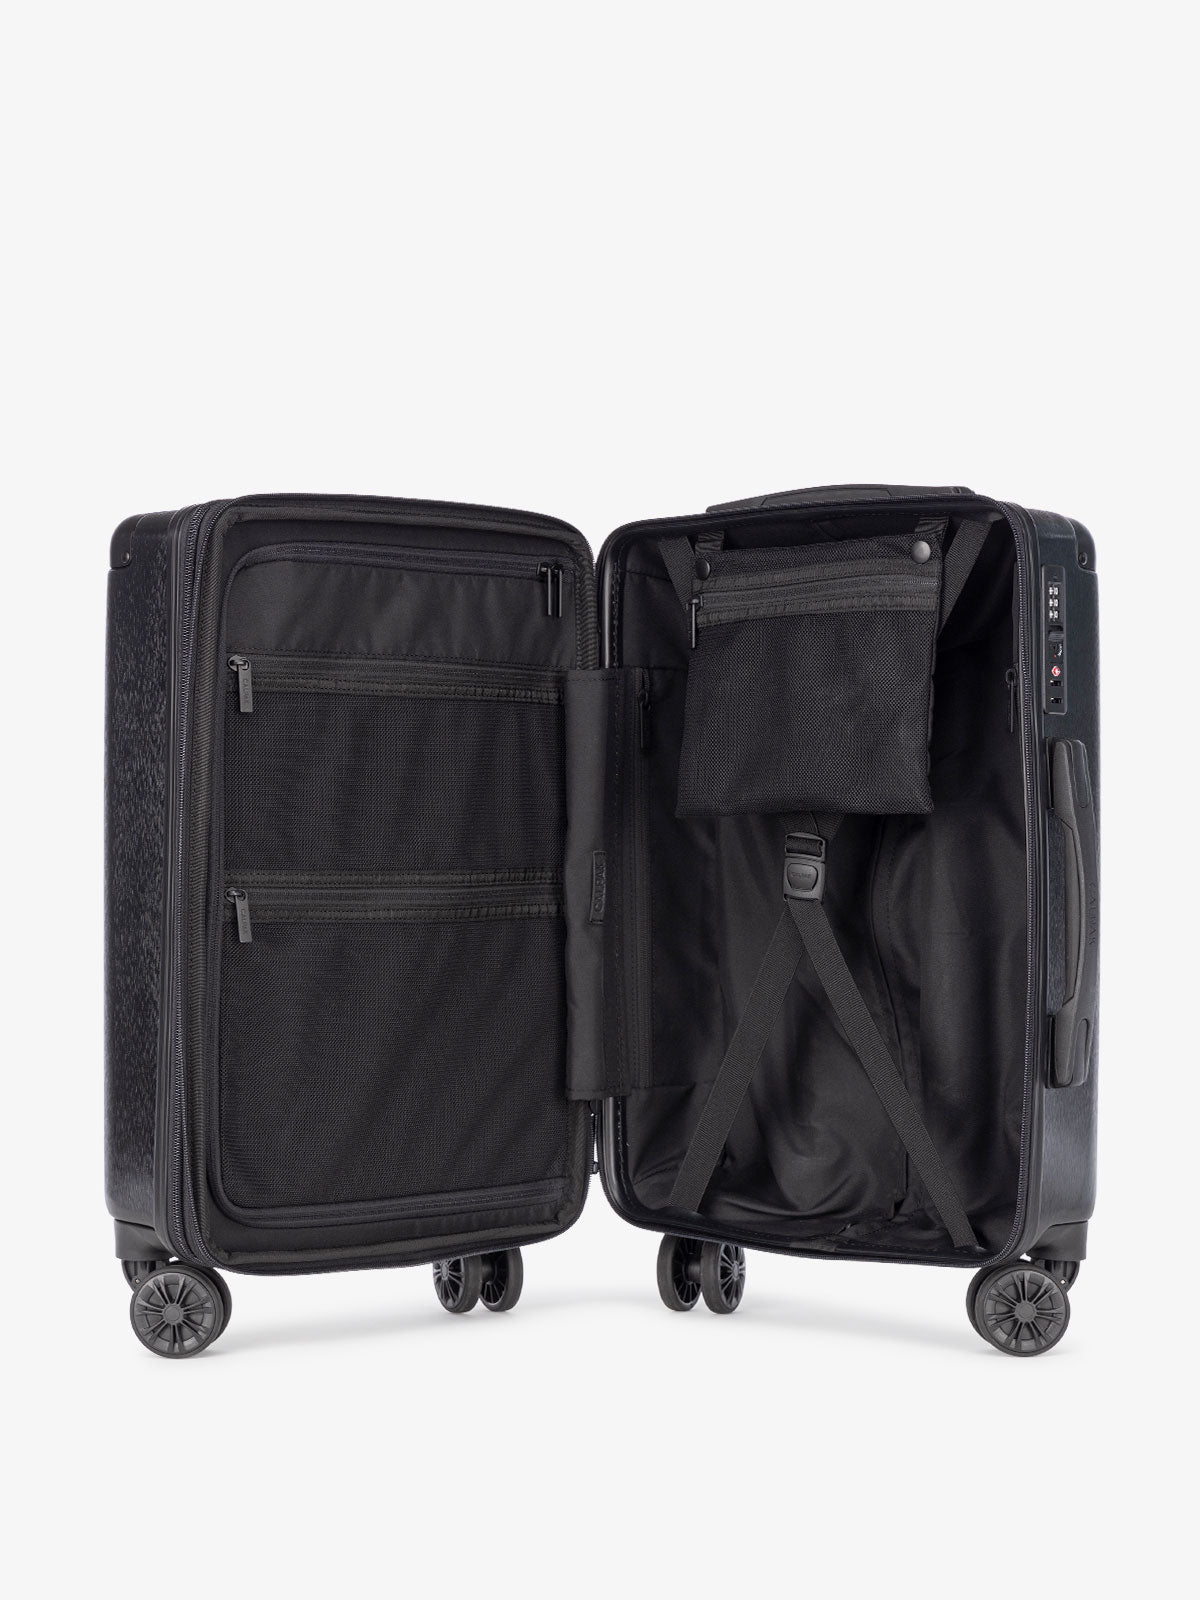 CALPAK Ambeur black medium sized expandable suitcase with compression straps